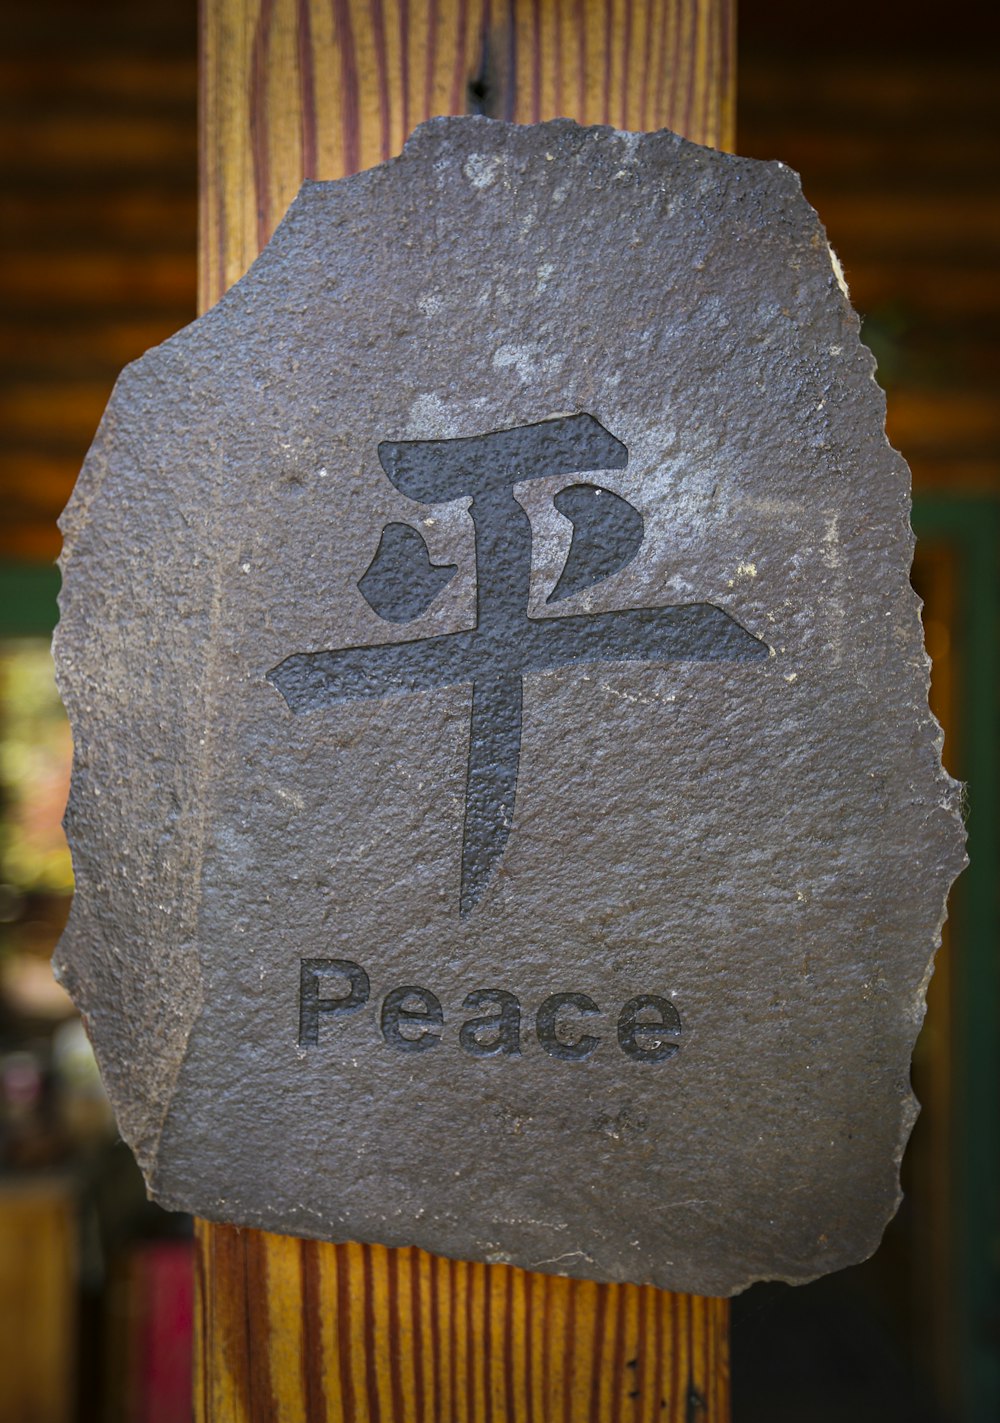 gray concrete cross with kanji text